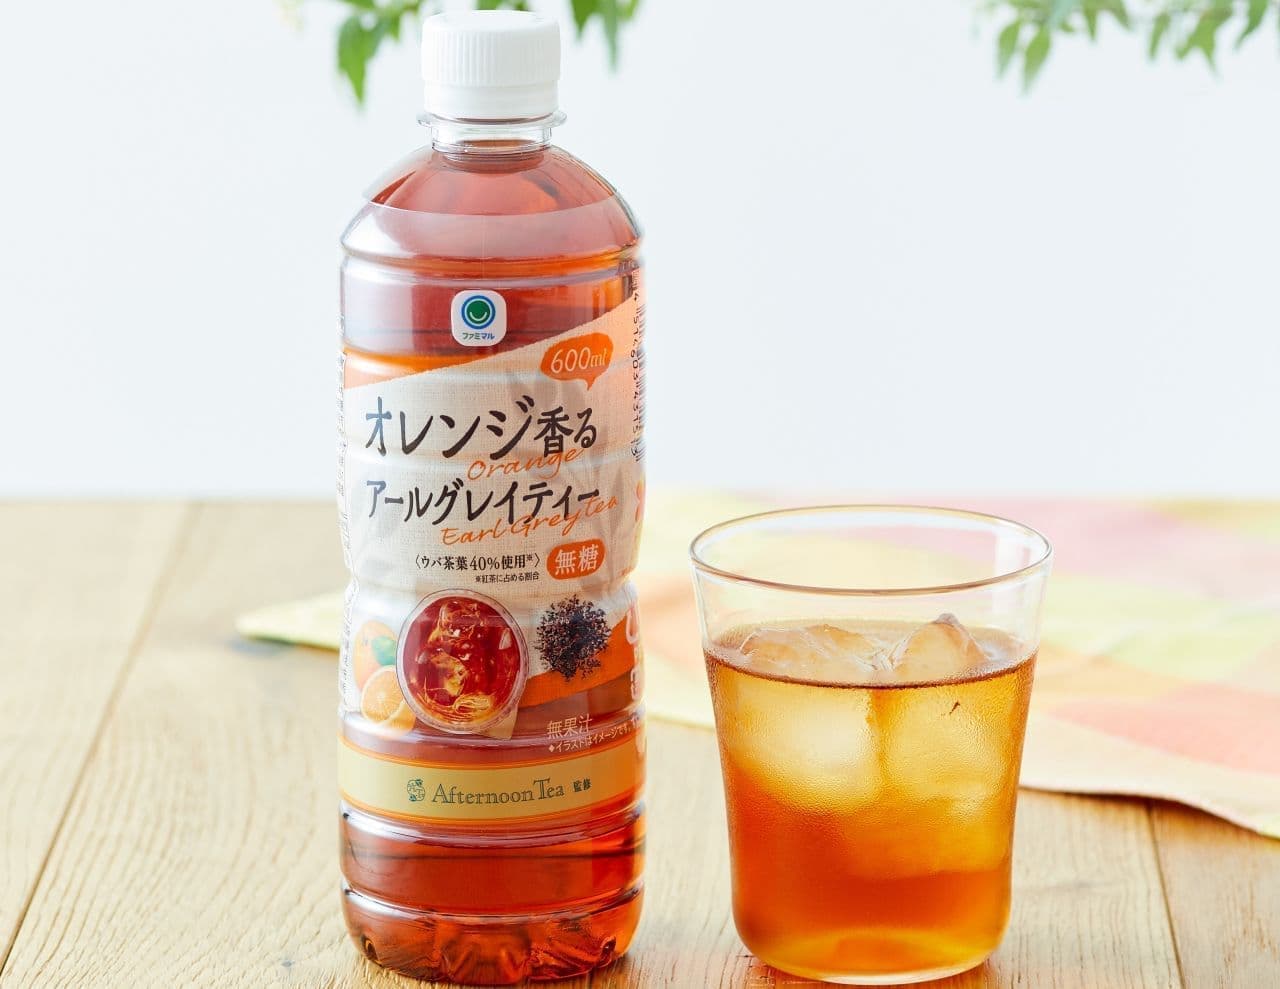 Famimaru Afternoon Tea-supervised Earl Grey Tea with Orange Scent